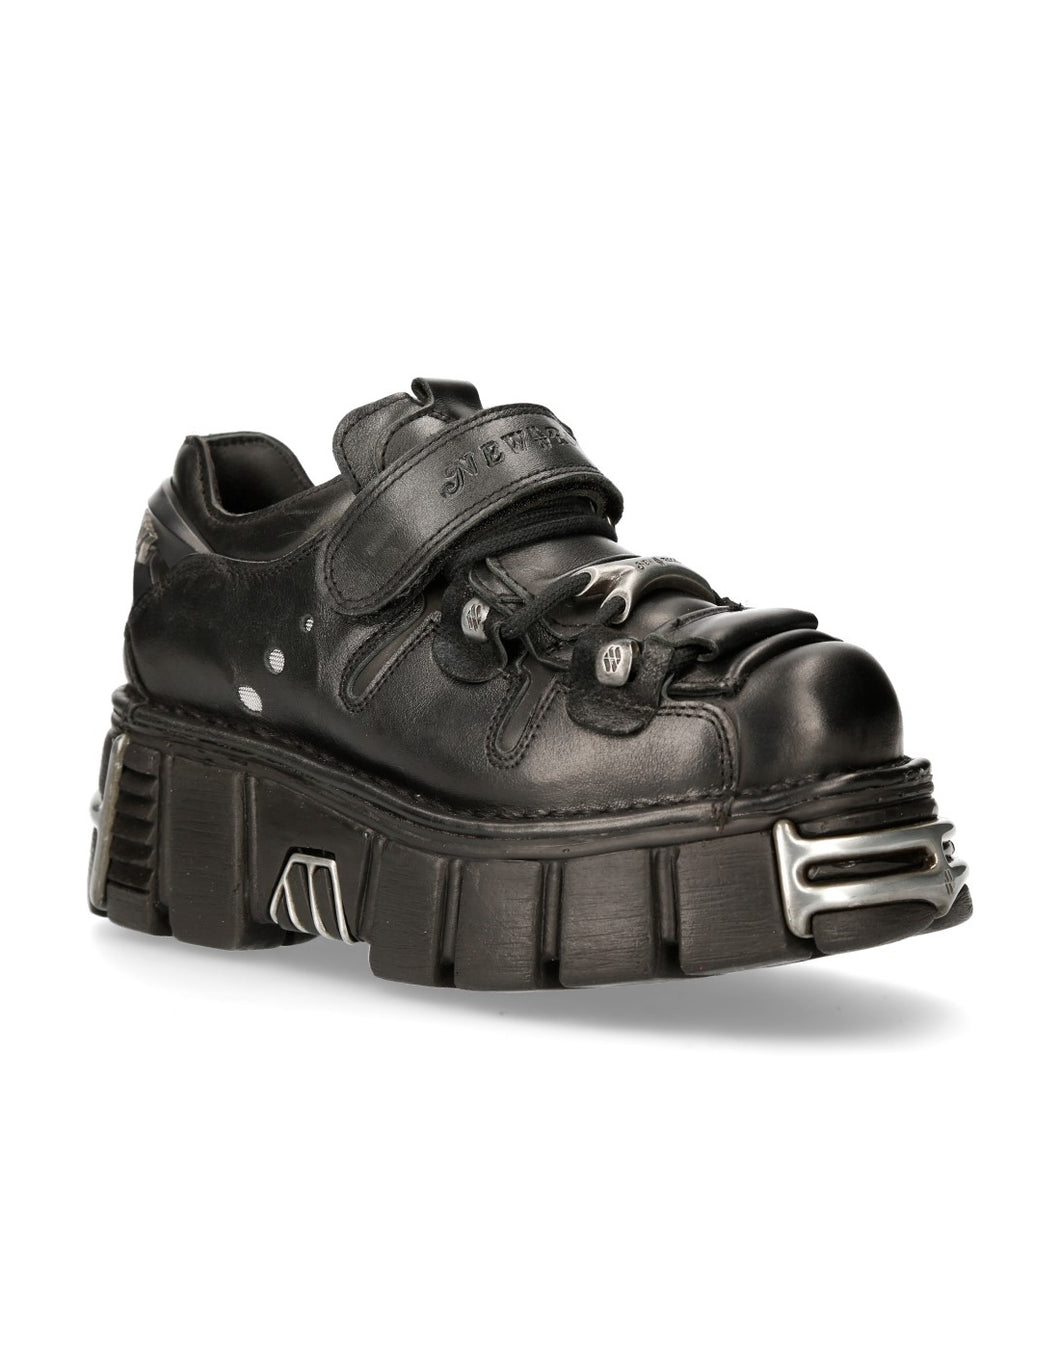 New Rock Platform Ankle Boots Metallic M-131-S1 Black Tower Men's Shoes